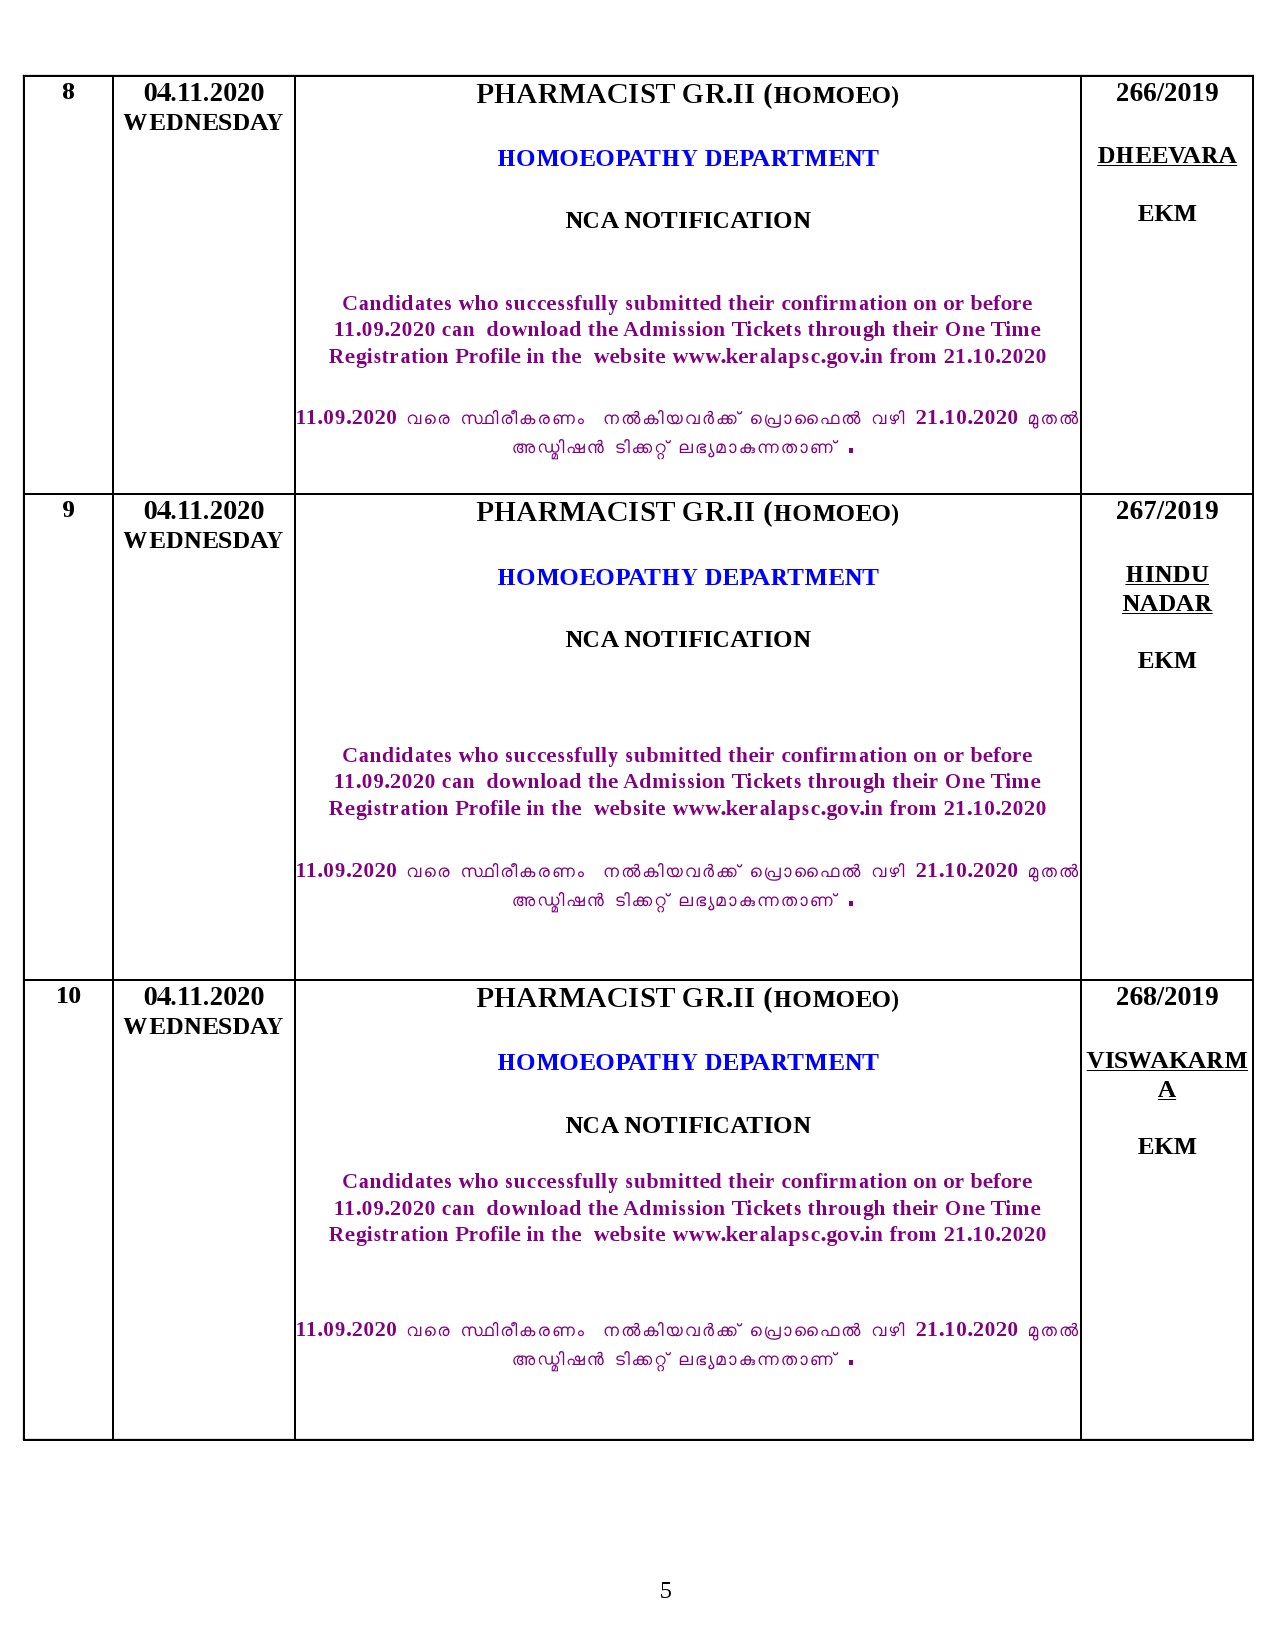 Kerala PSC Final Exam Schedule for November 2020 - Notification Image 5